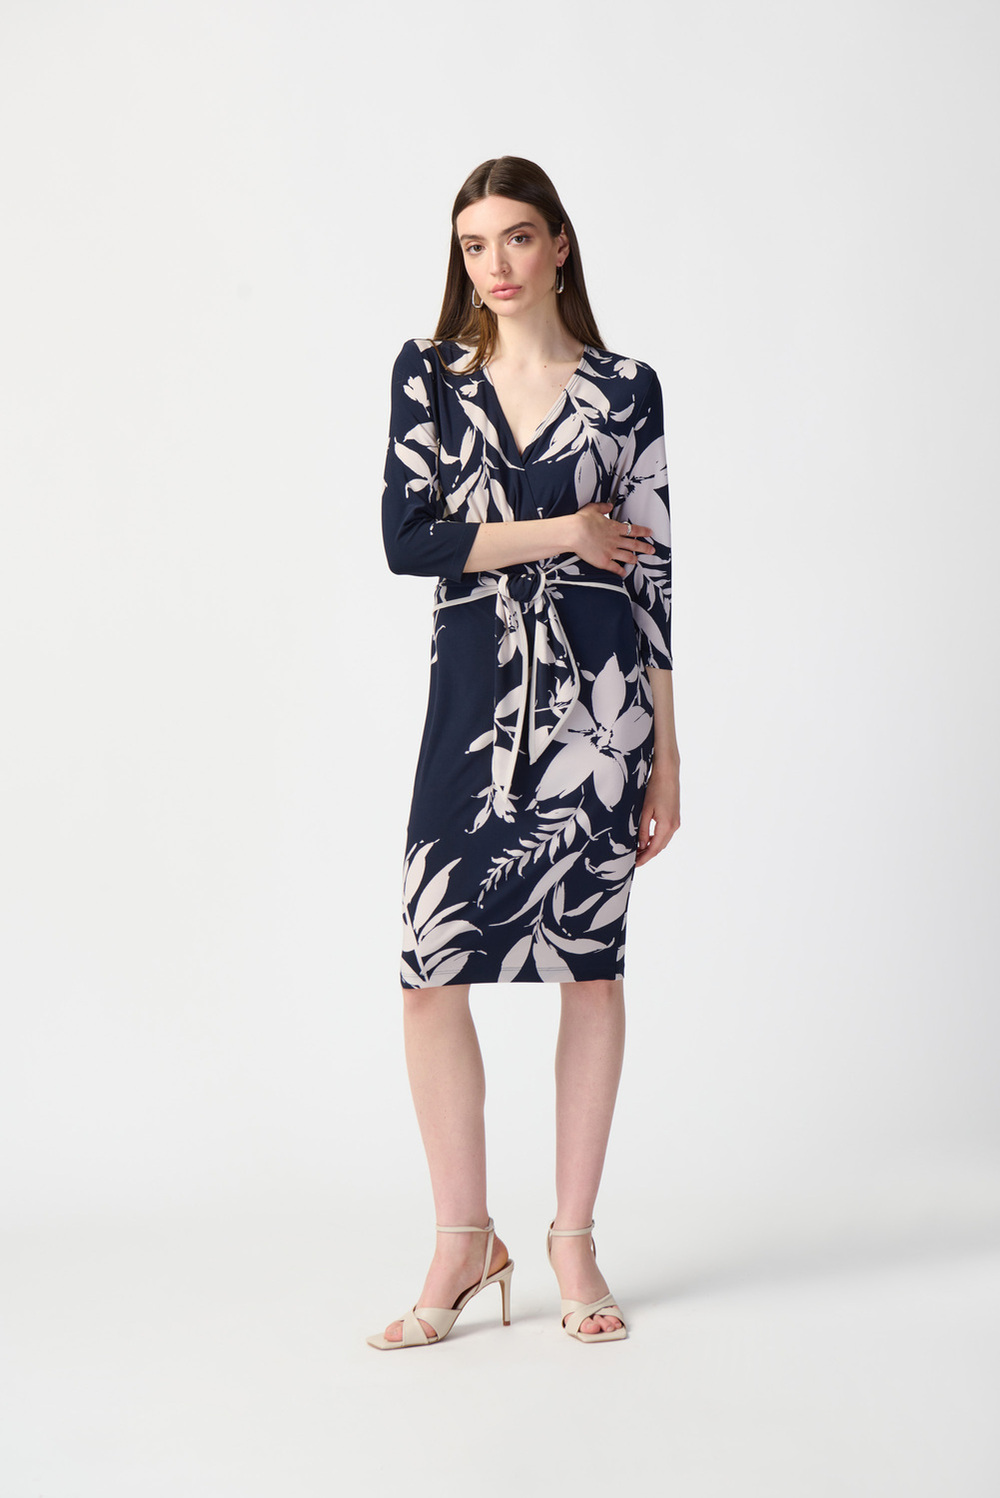 Floral Print Wrap Dress Style 241056. Midnight Blue/beige